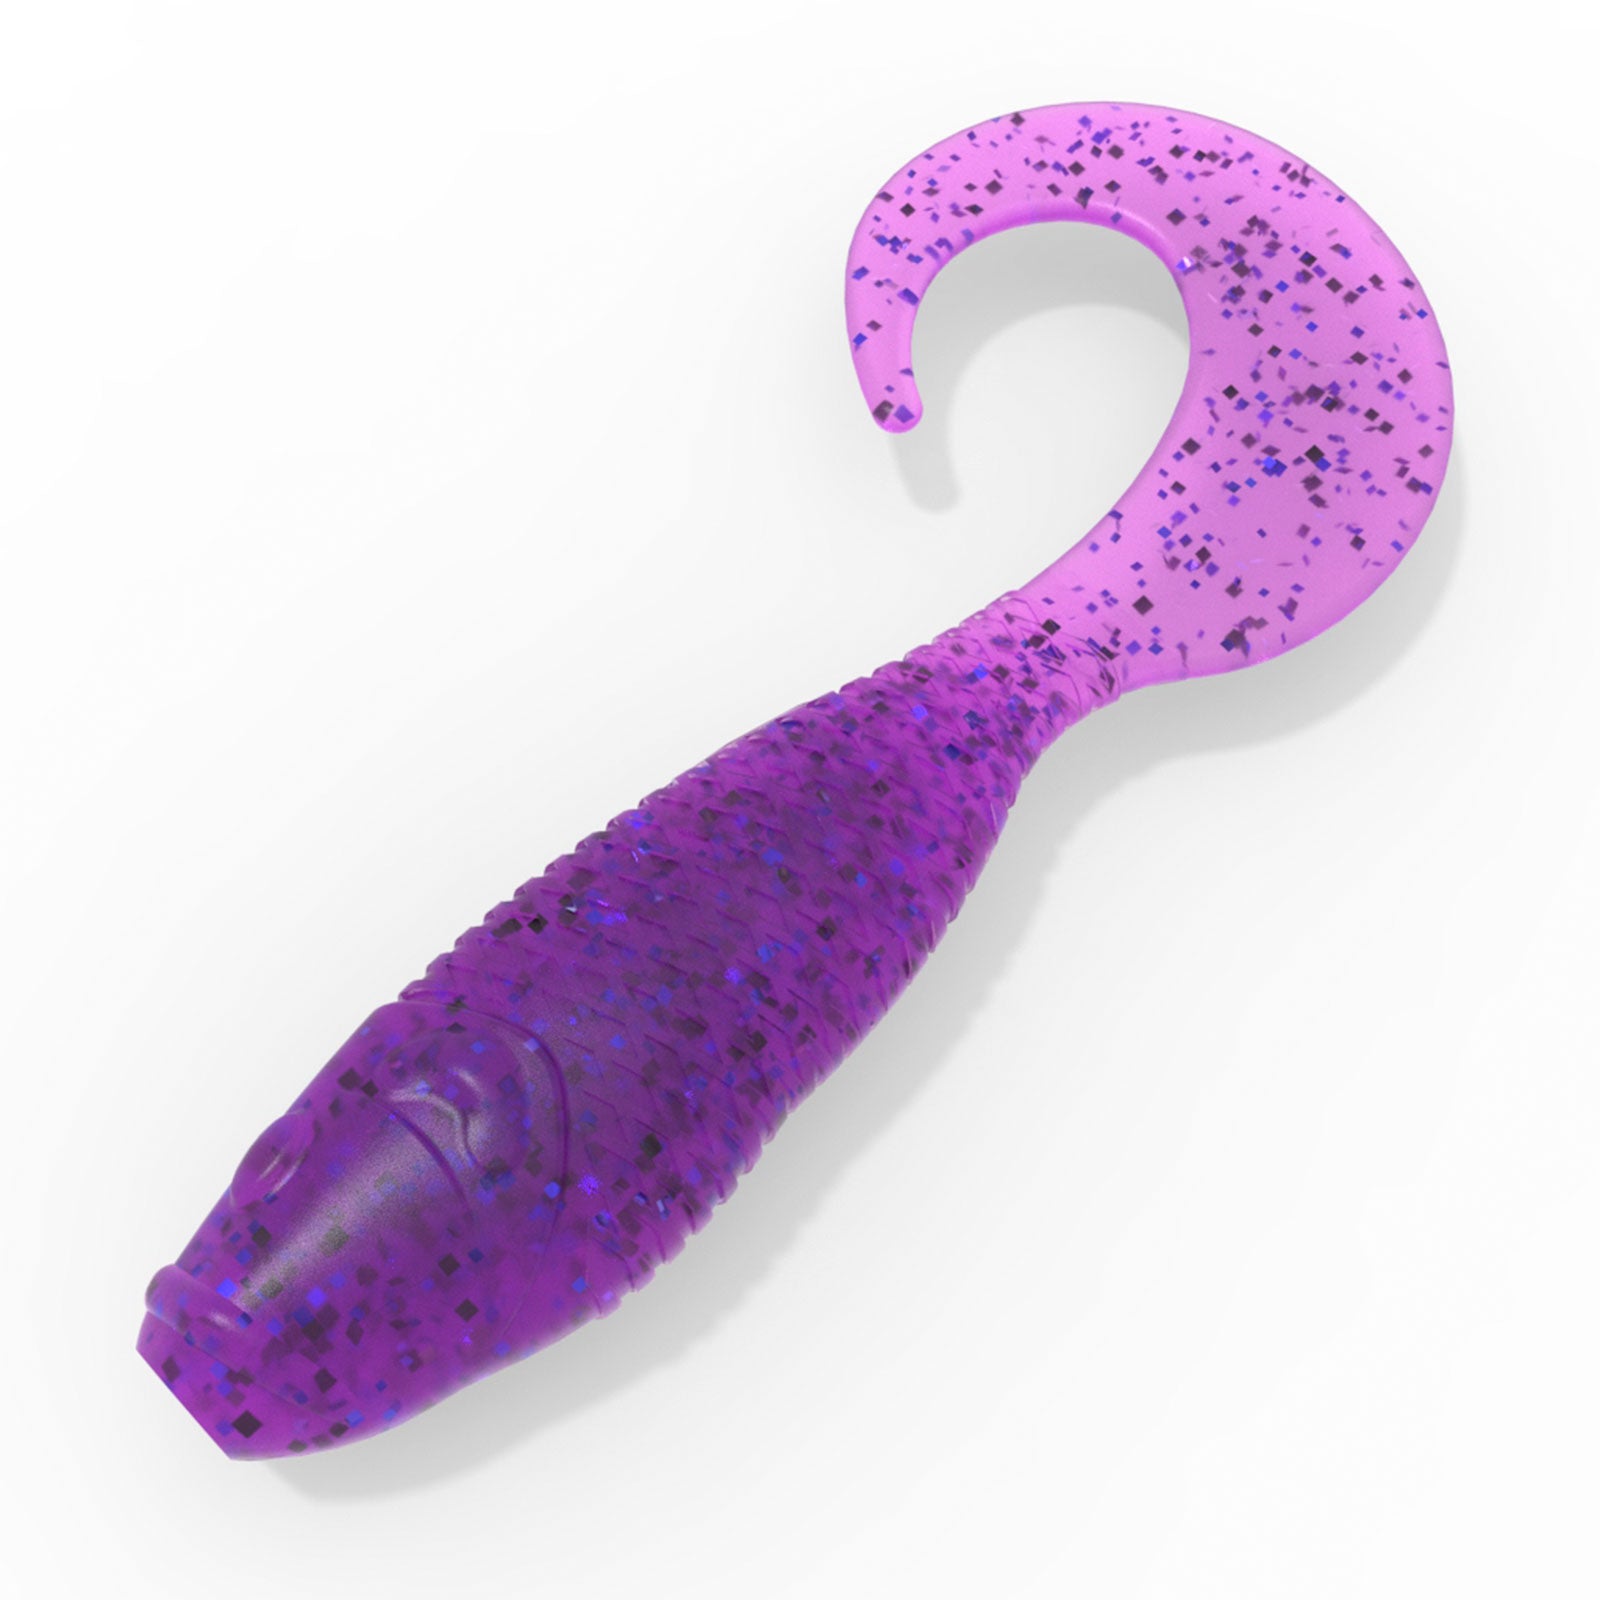 Galaxy Purple SIGNATURE BLEND 12 Fl Oz Bottle Plastisol Fishing Lure Making  Soft Plastic 